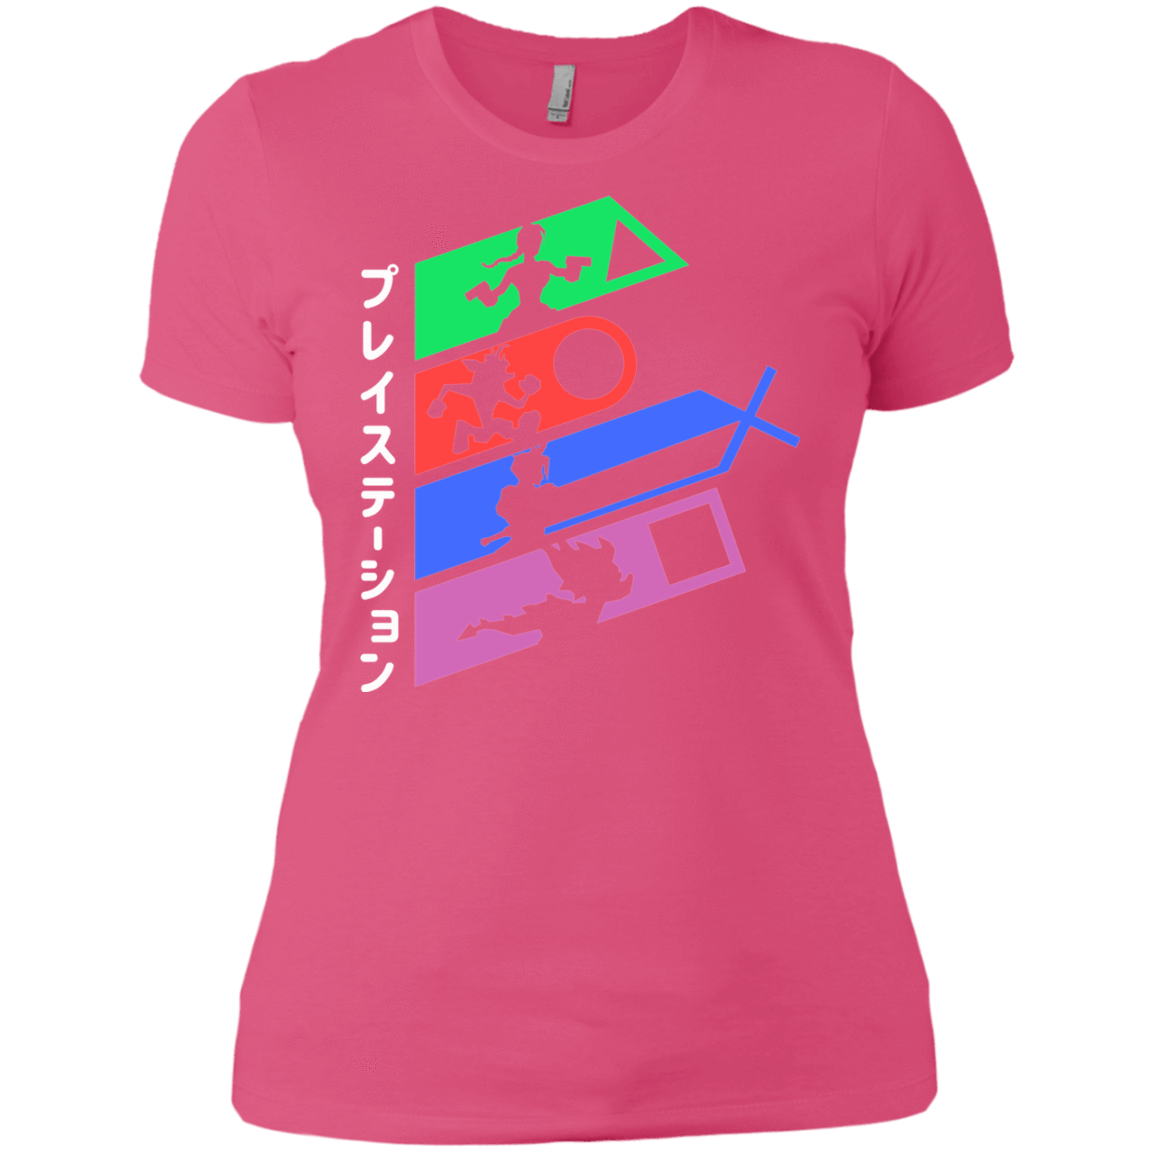 T-Shirts Hot Pink / X-Small PSX Women's Premium T-Shirt